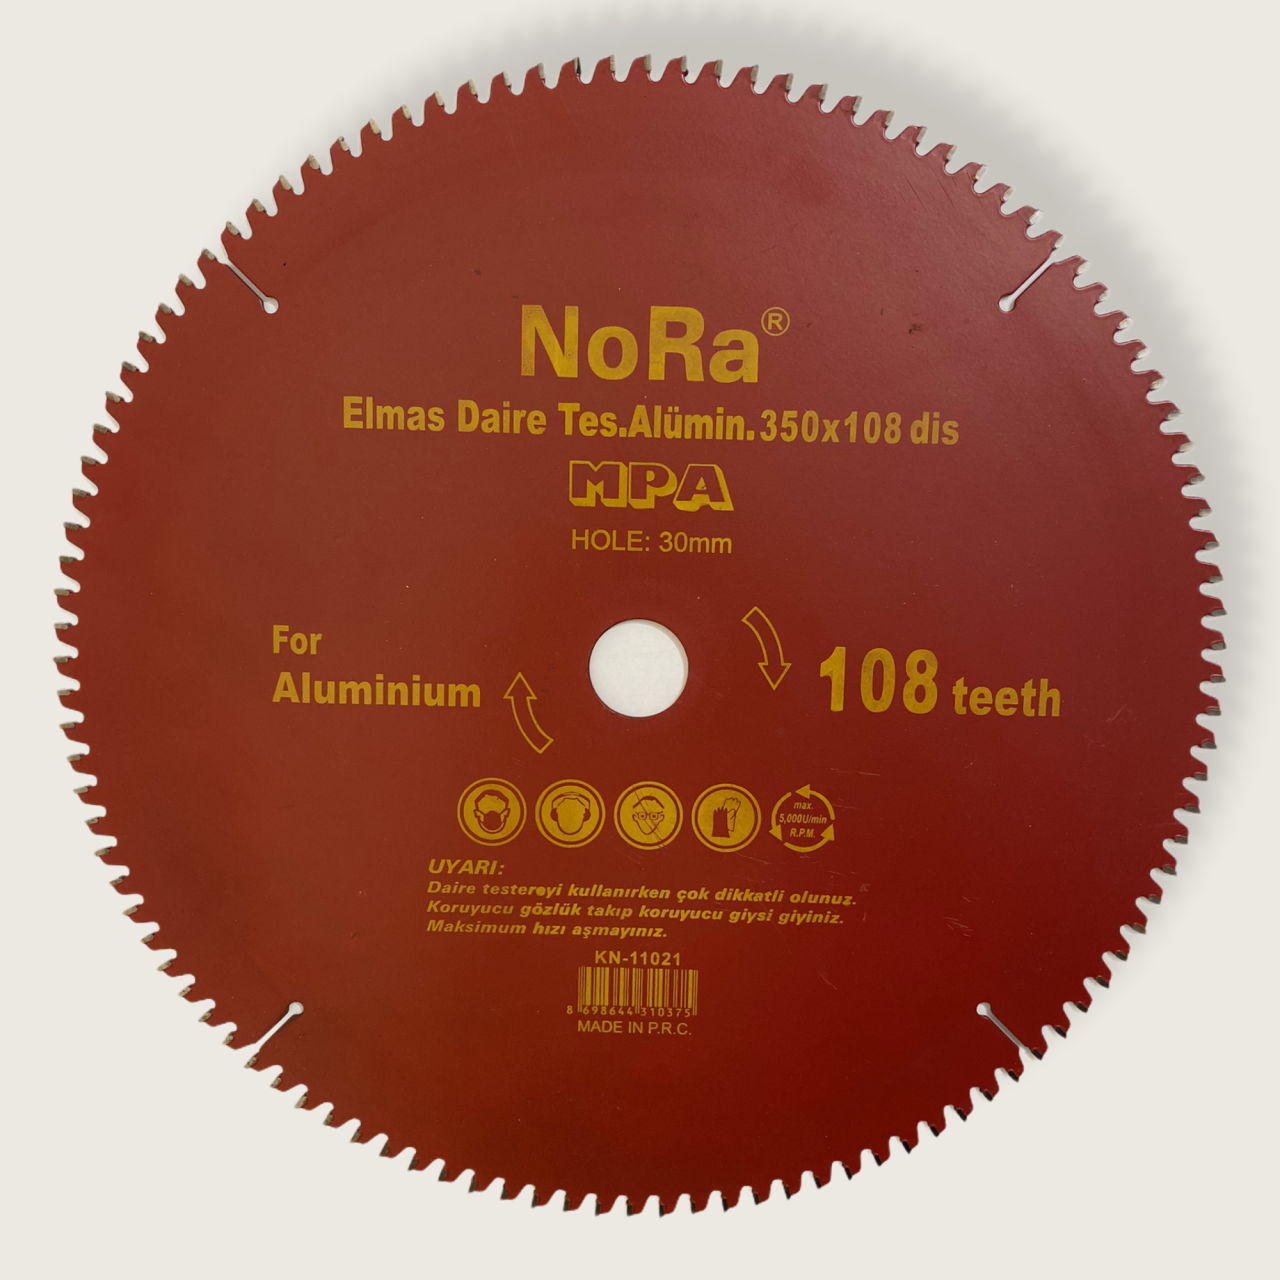 Nora 350x108 Alüminyum Testere